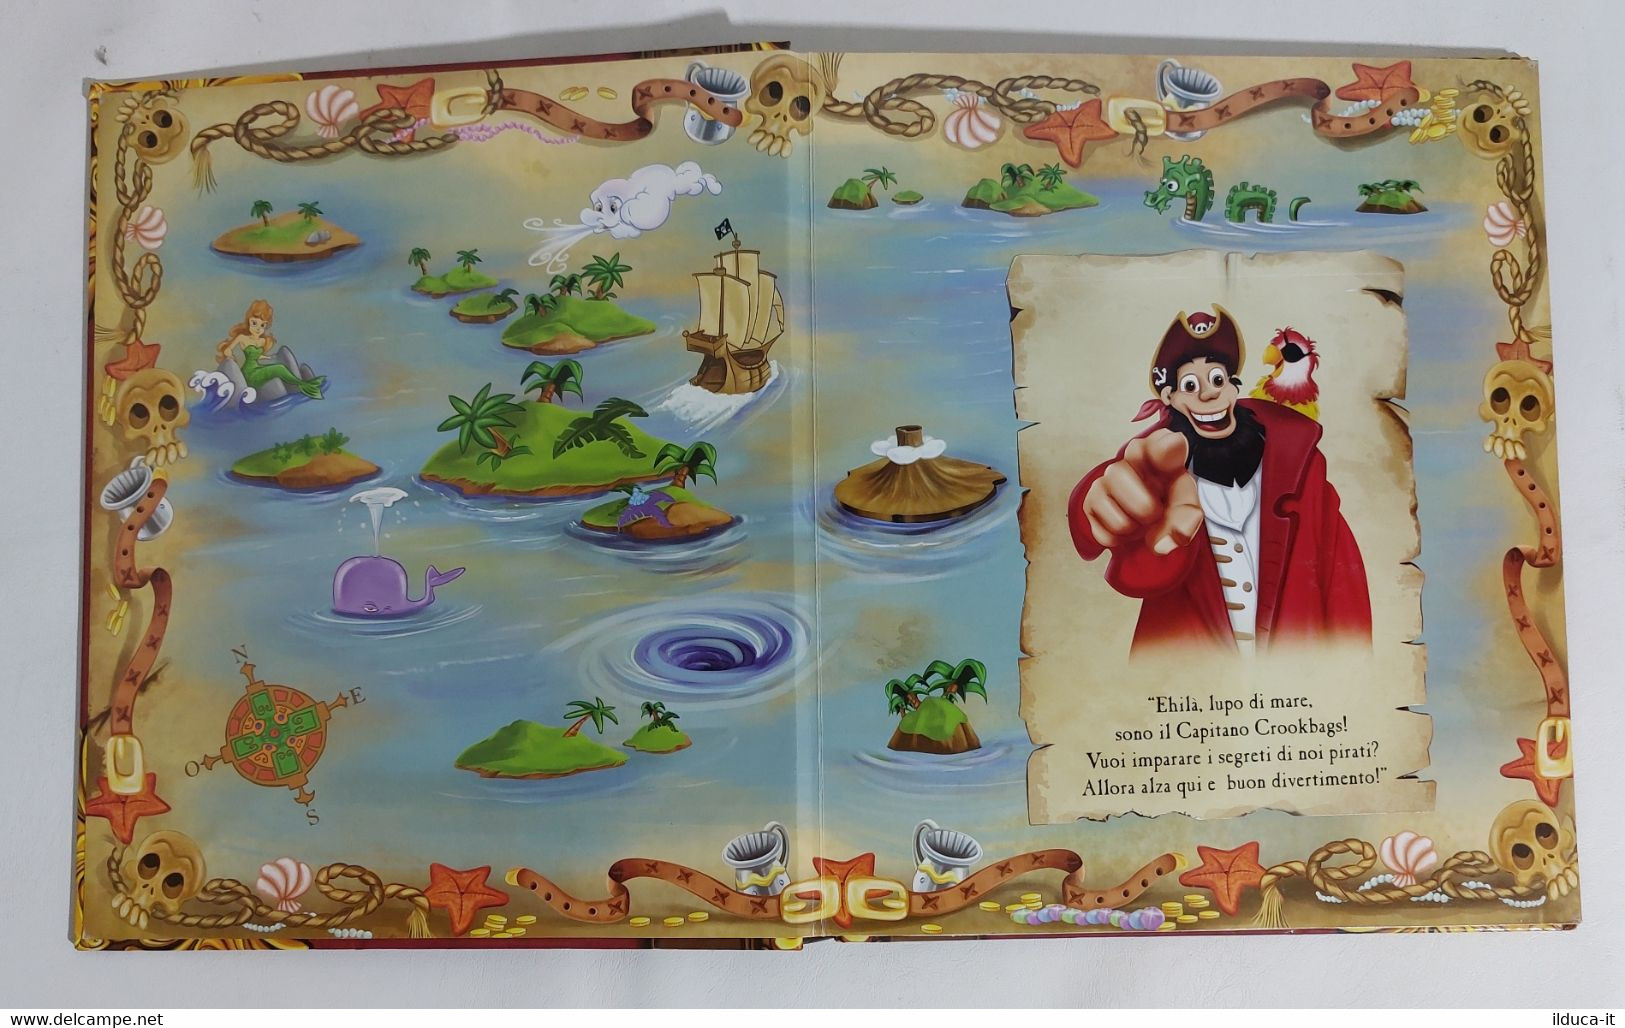 I109759 V Libro Pop-Up - Avventure Con I Pirati - EdiBimbi 2008 - Teenagers & Kids